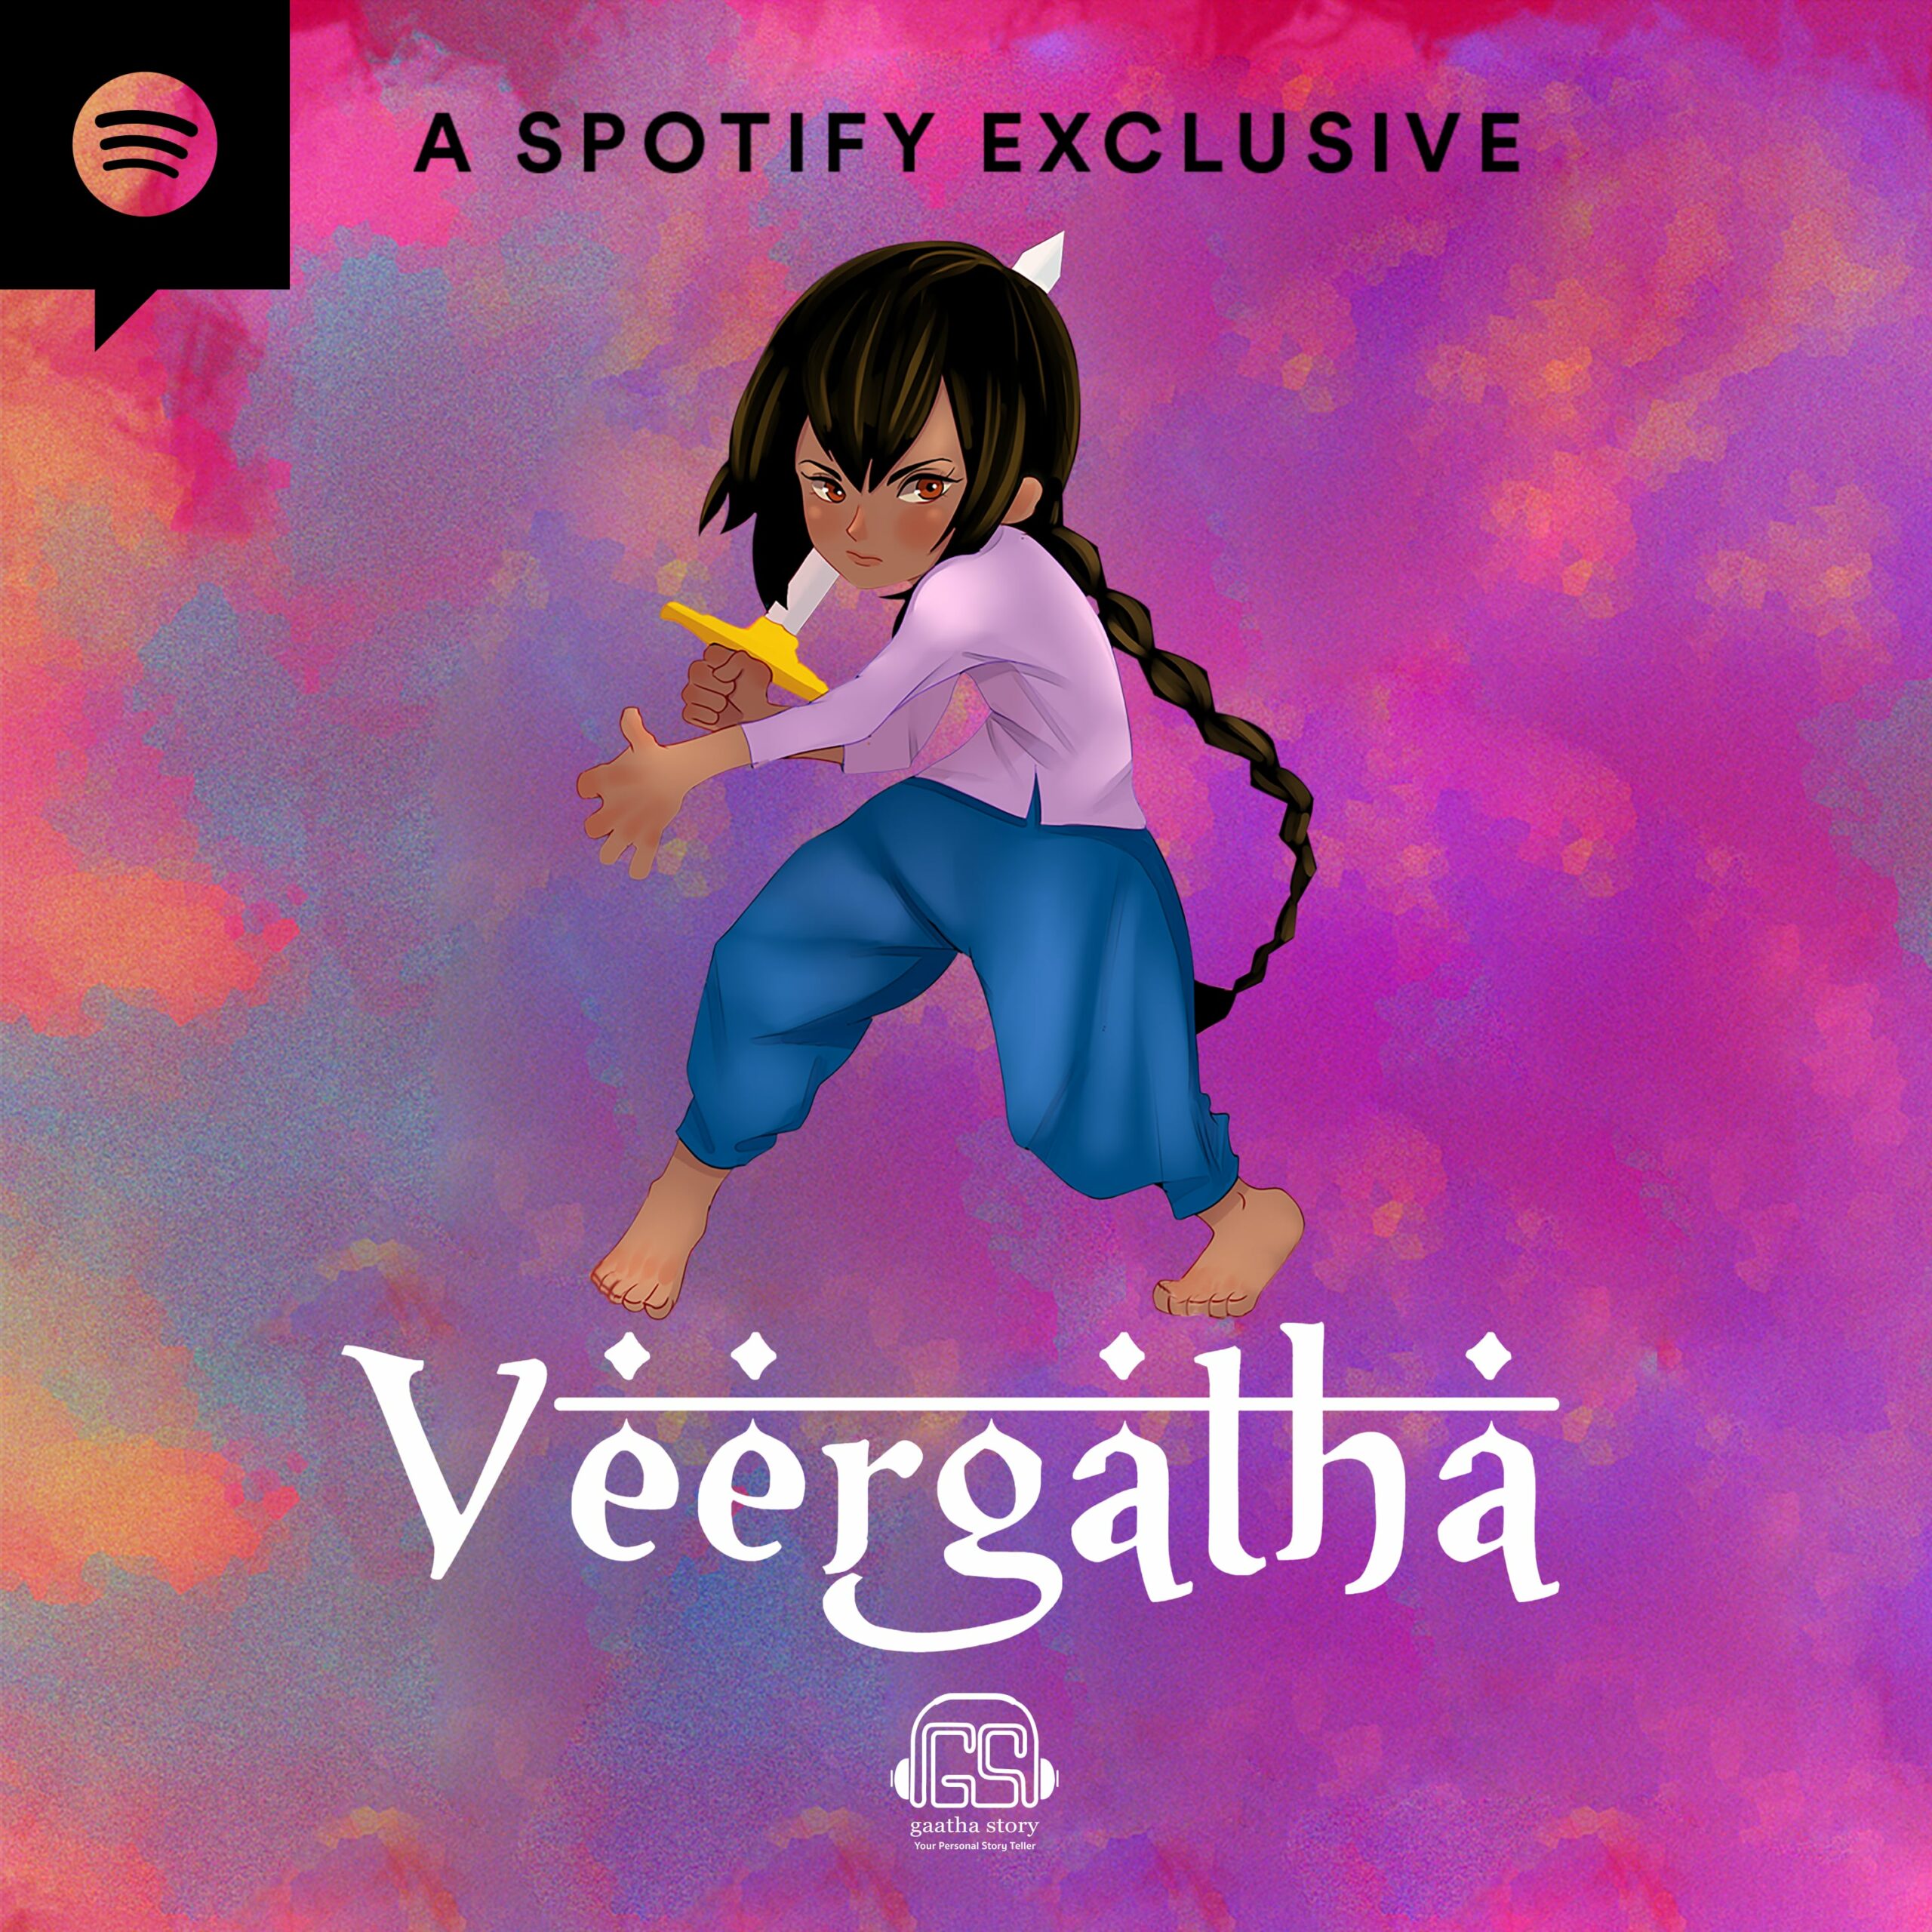 Veergatha Podcast by gaathastory